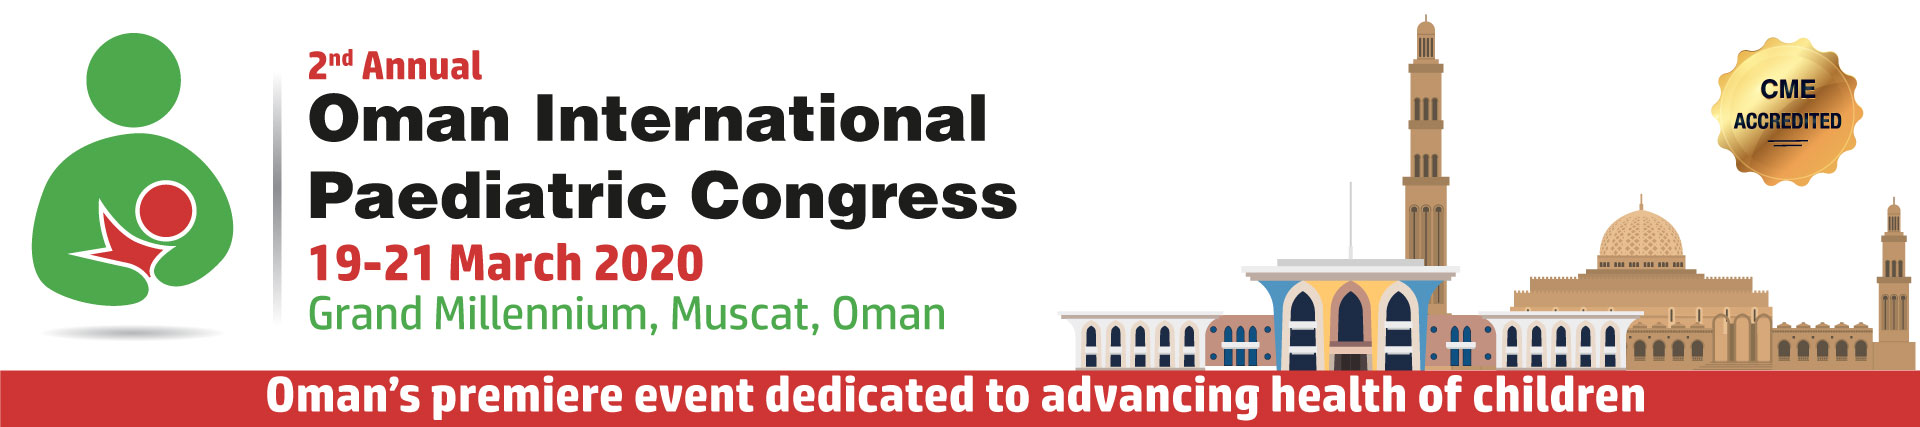 The 2nd Annual Oman International Paediatric Congress, Muscat, Oman